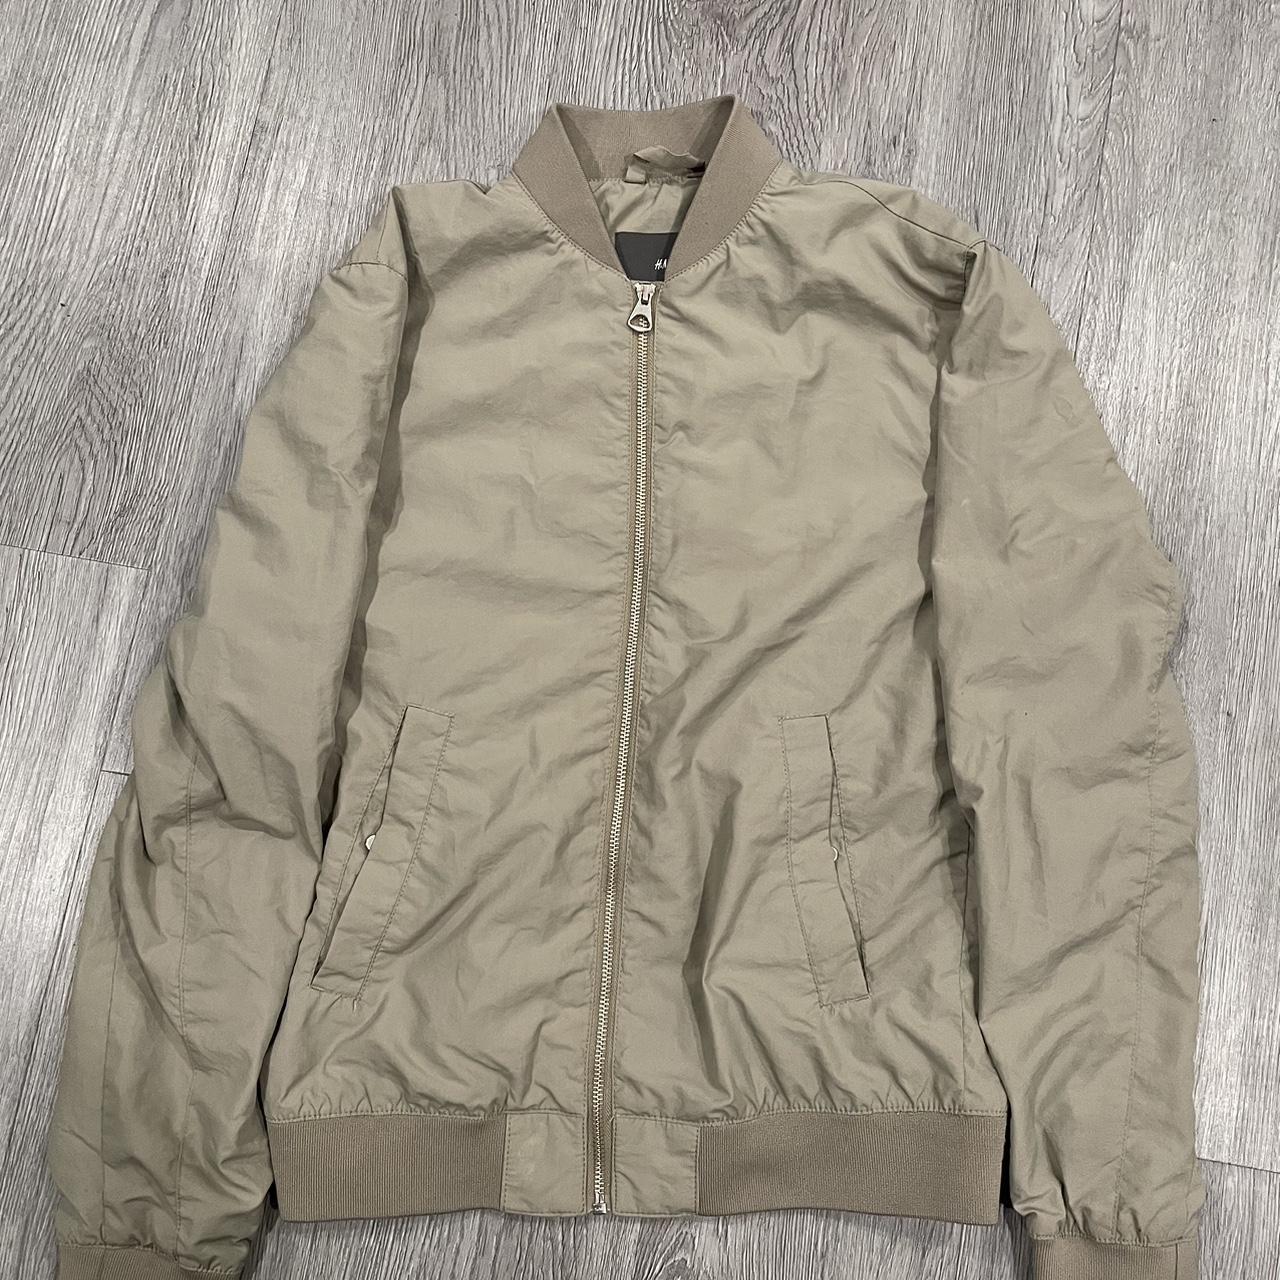 H&M bomber jacket size x small - Depop